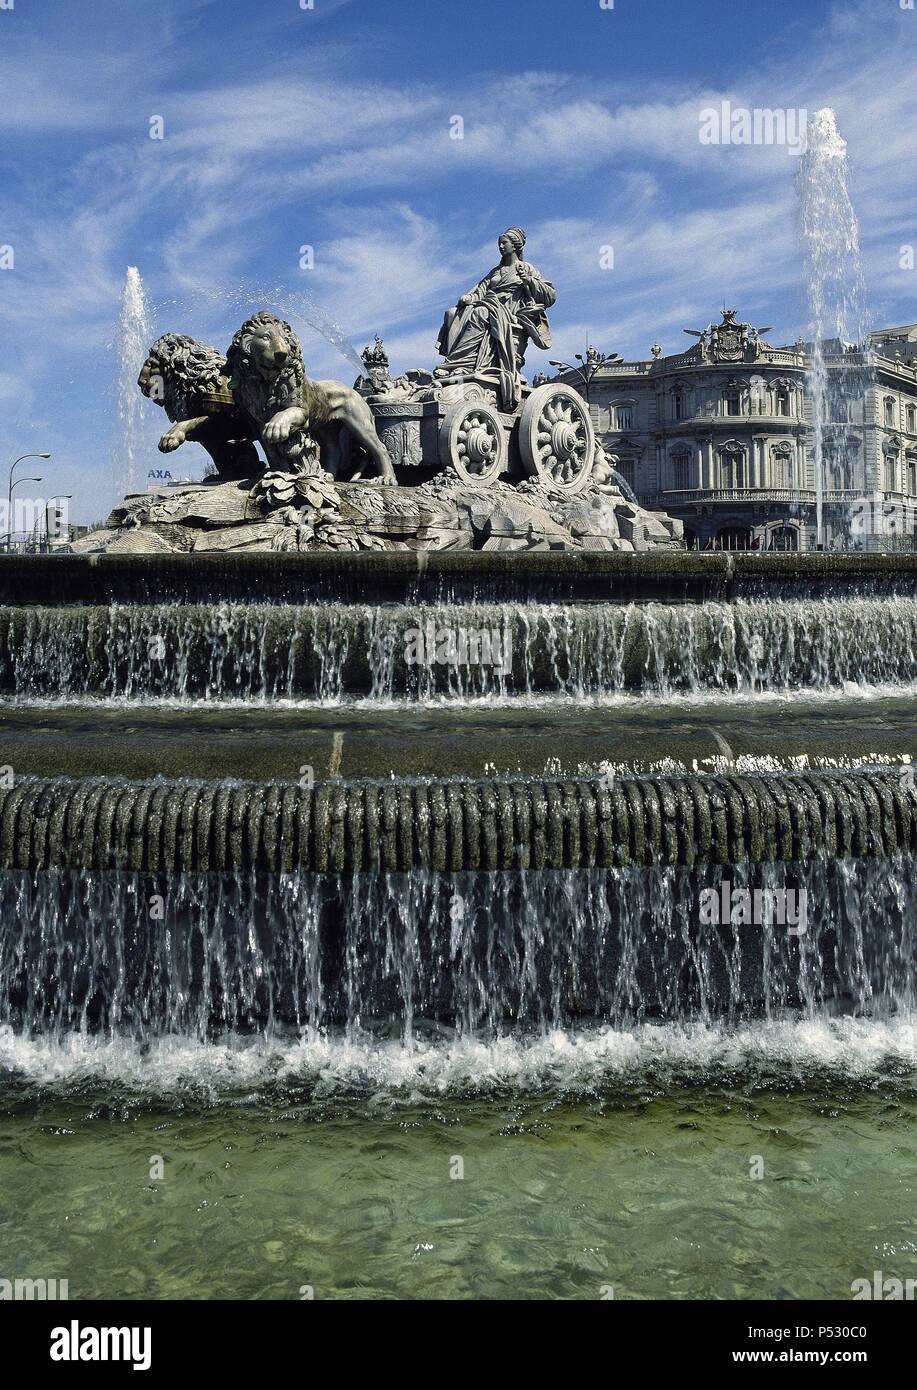 Spain. Madrid. Fountain of Cibeles. Monument designed by Ventura Rodri guez between 177-1782. Neo-classical. Stock Photo